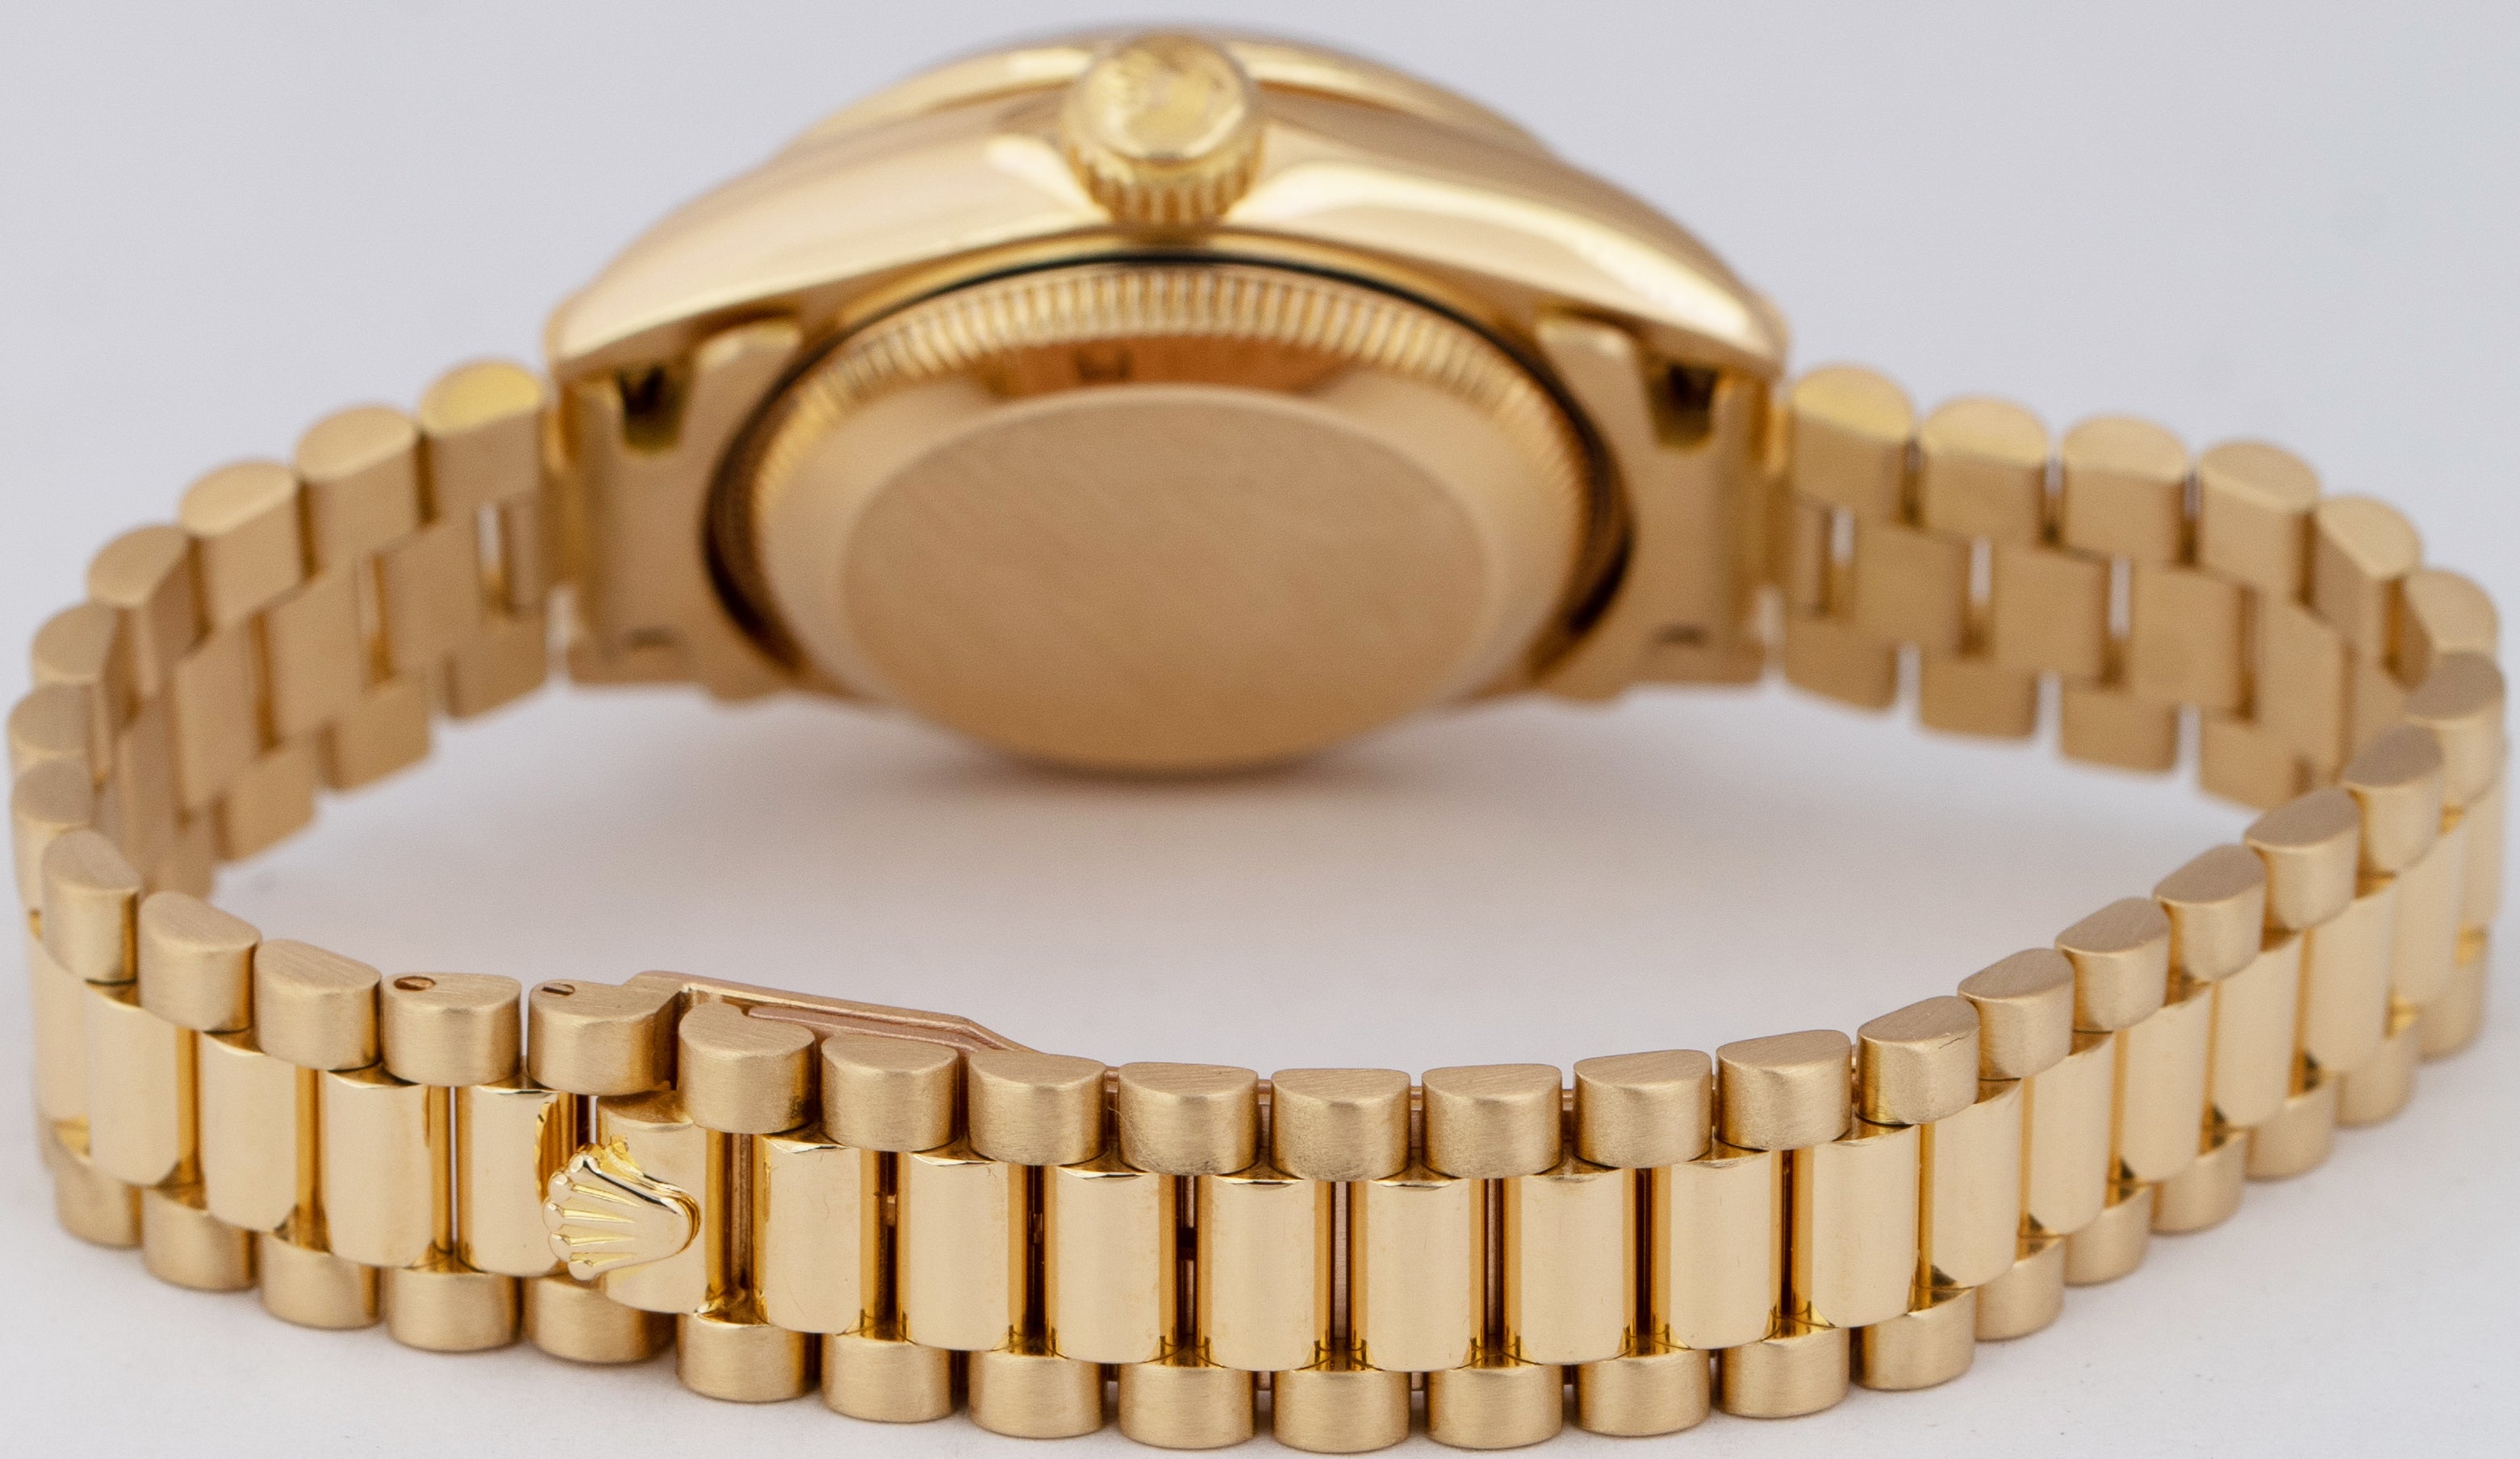 Ladies Rolex DateJust President 26mm Champagne DIAMOND Gold Watch 69238 B+P